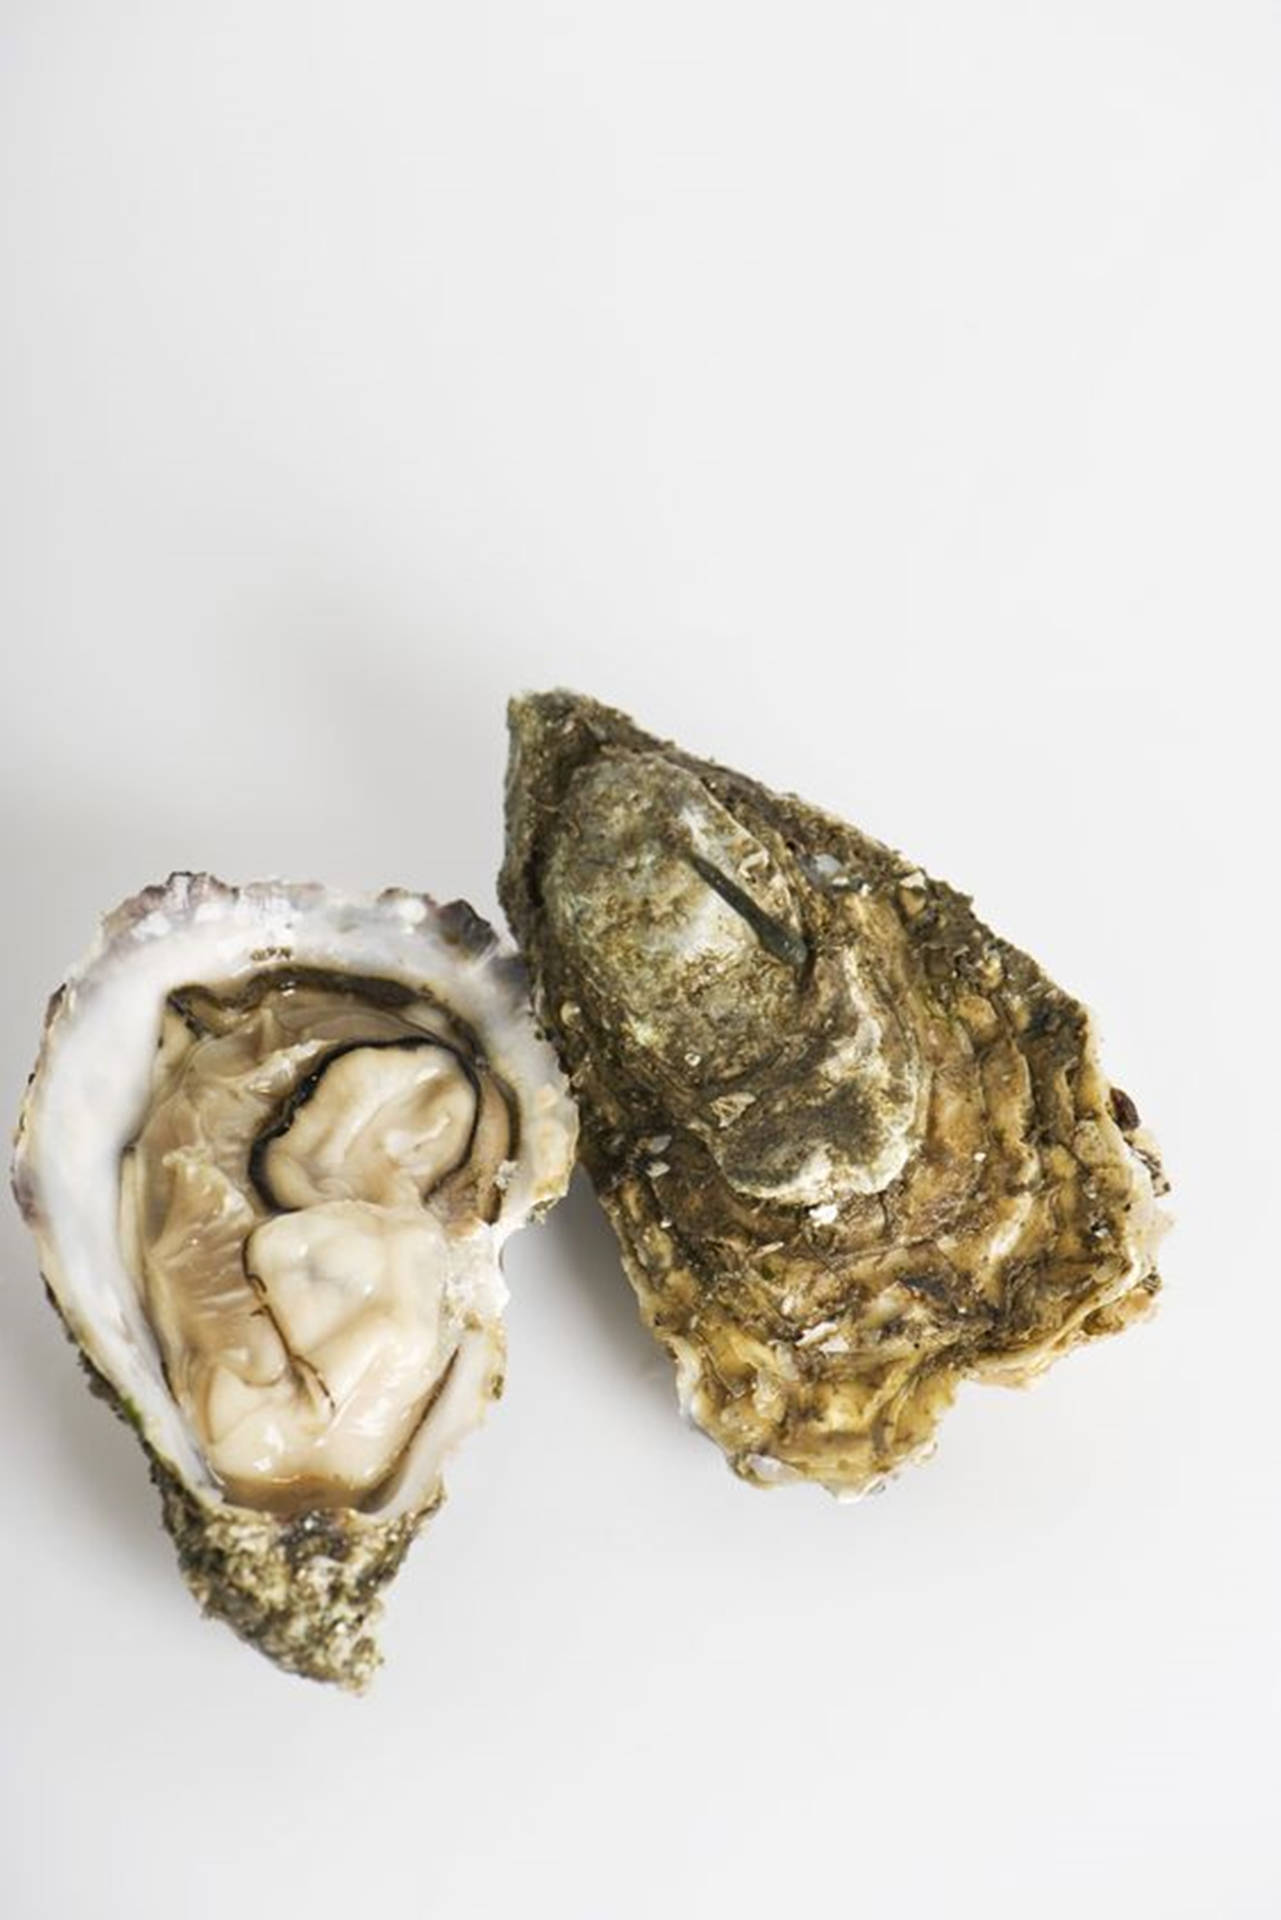 Minimalist Two Oysters Wallpaper